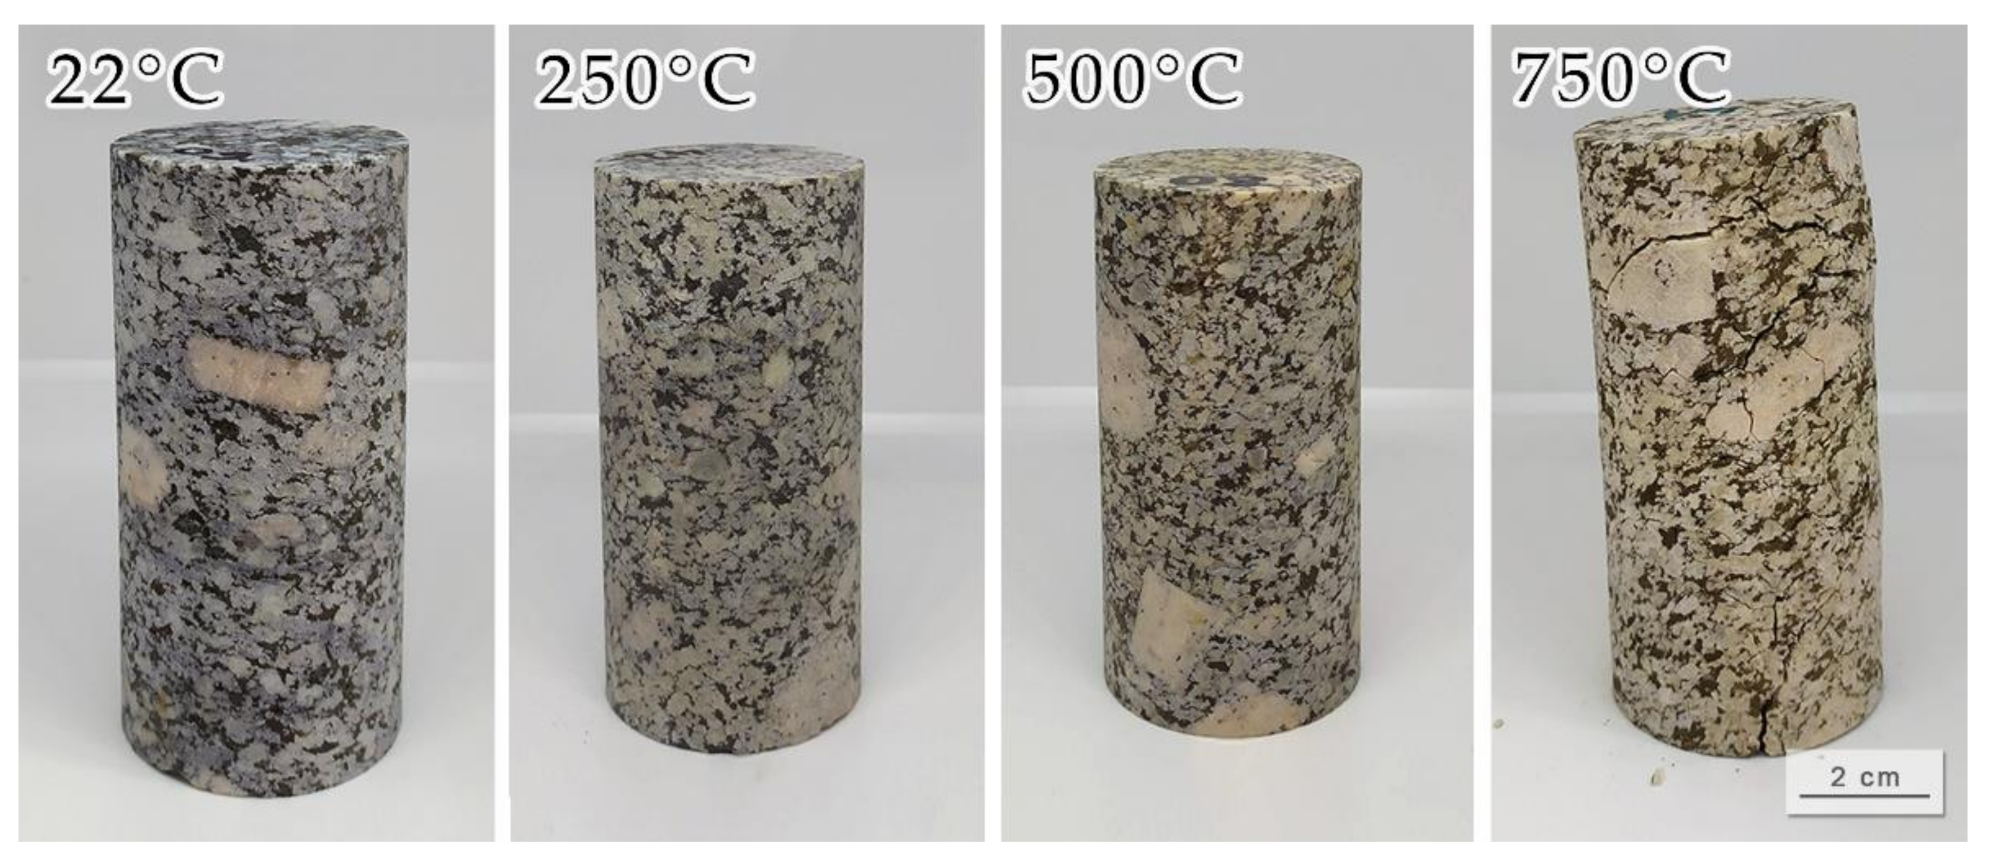 Kit Granite et son altération (8 groupes) - Jeulin